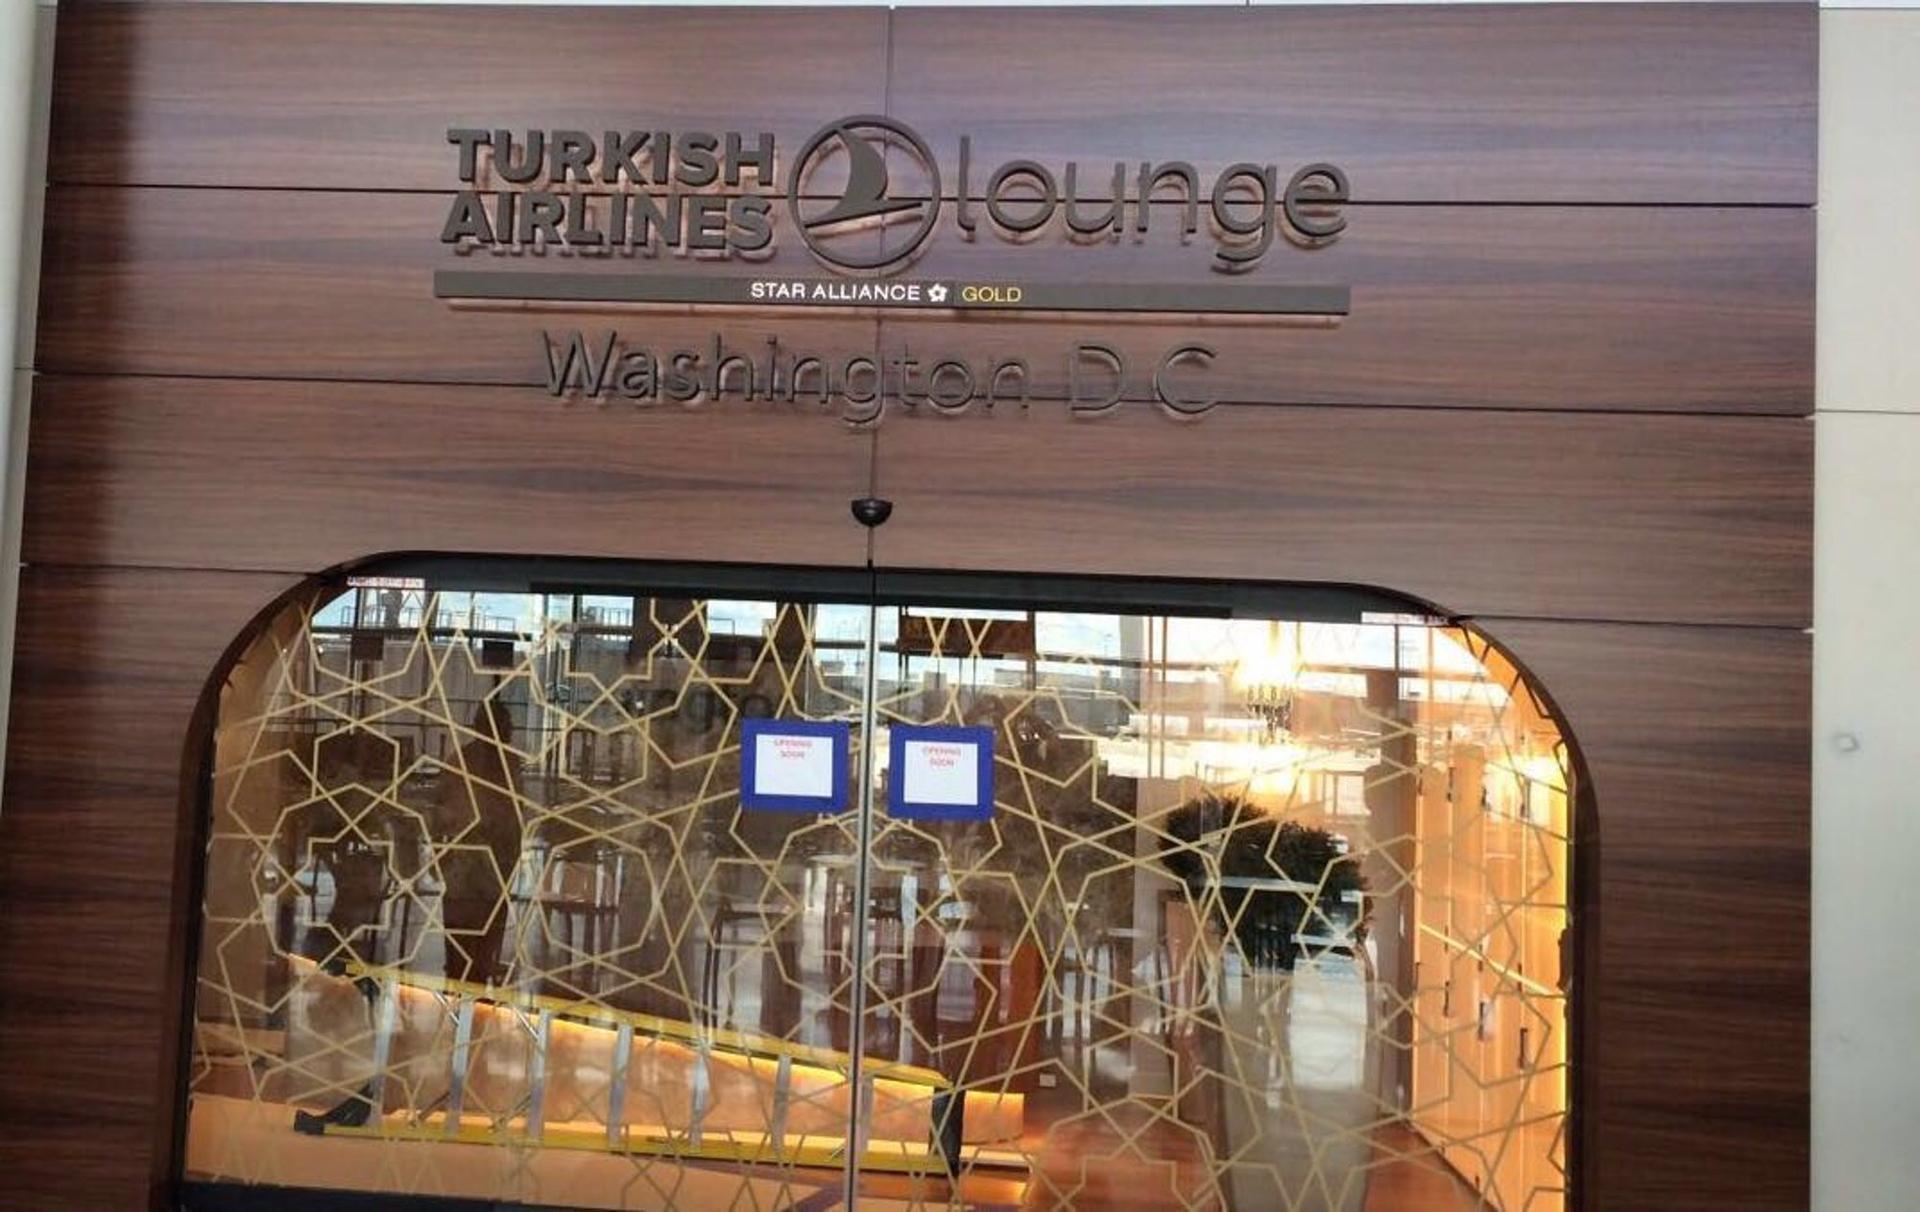 Turkish Airlines Lounge Washington D.C. image 10 of 100